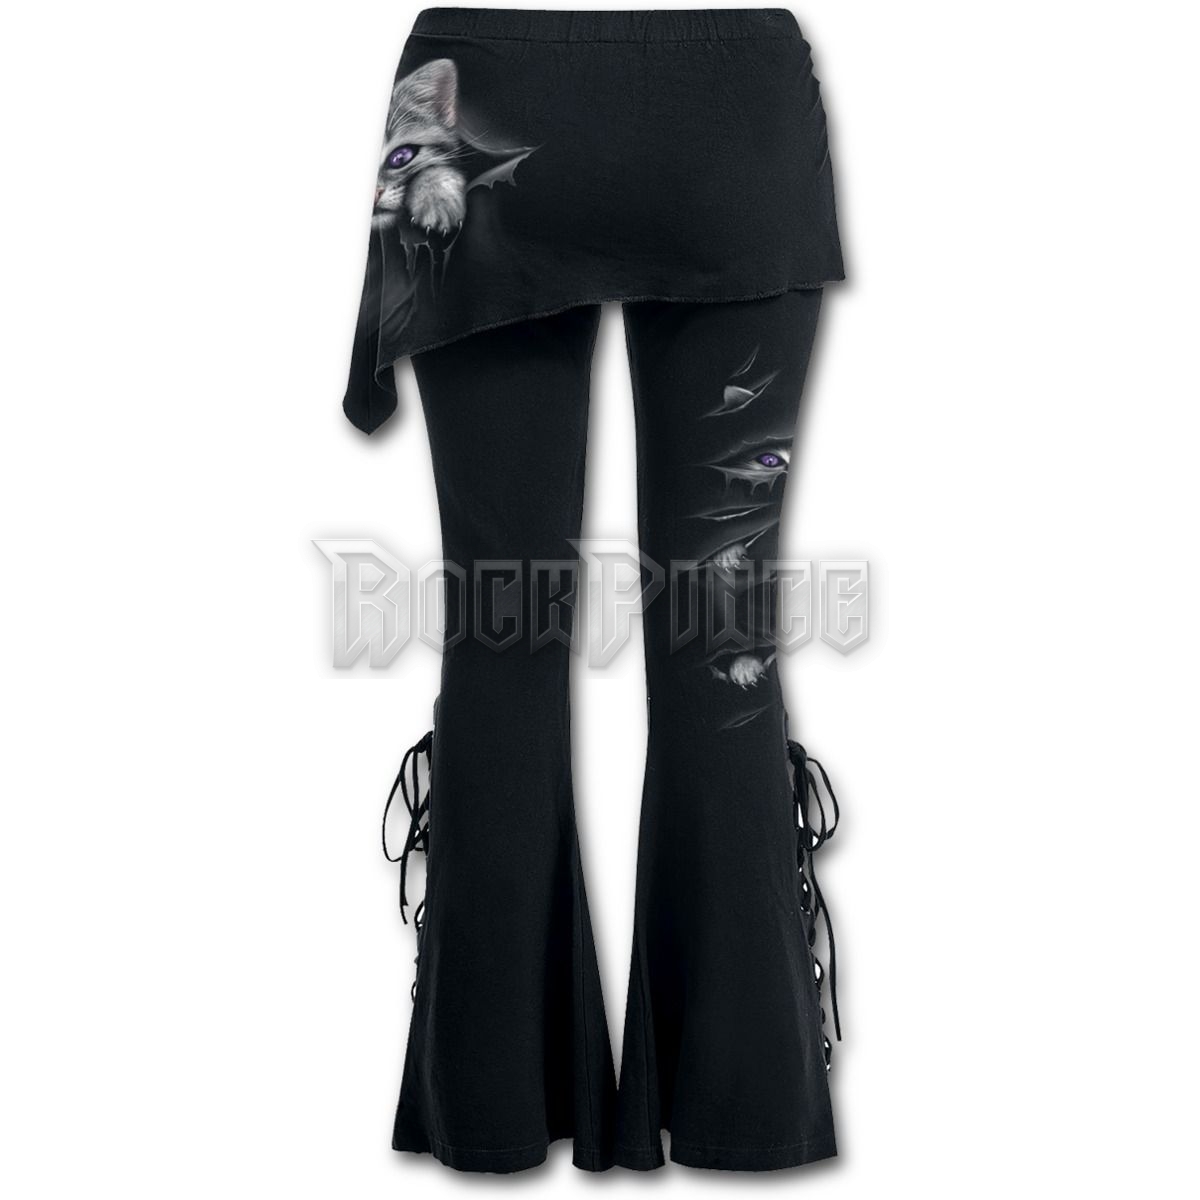 BRIGHT EYES - 2in1 Boot-Cut Leggings with Micro Slant Skirt (Plain) - F011G459